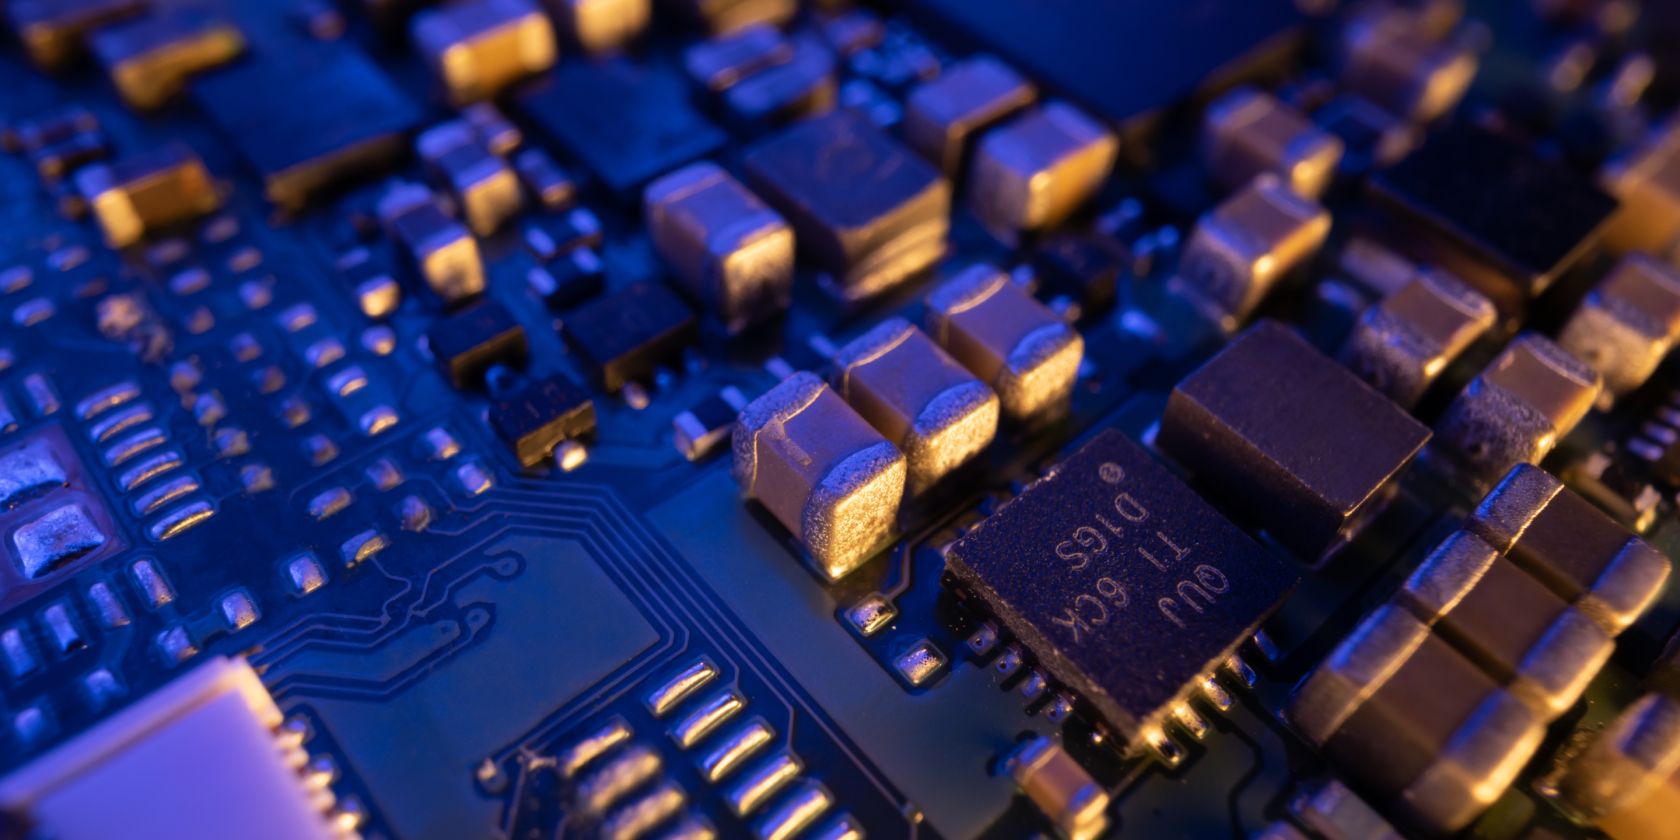 Closeup of a gaming motherboard's PCB